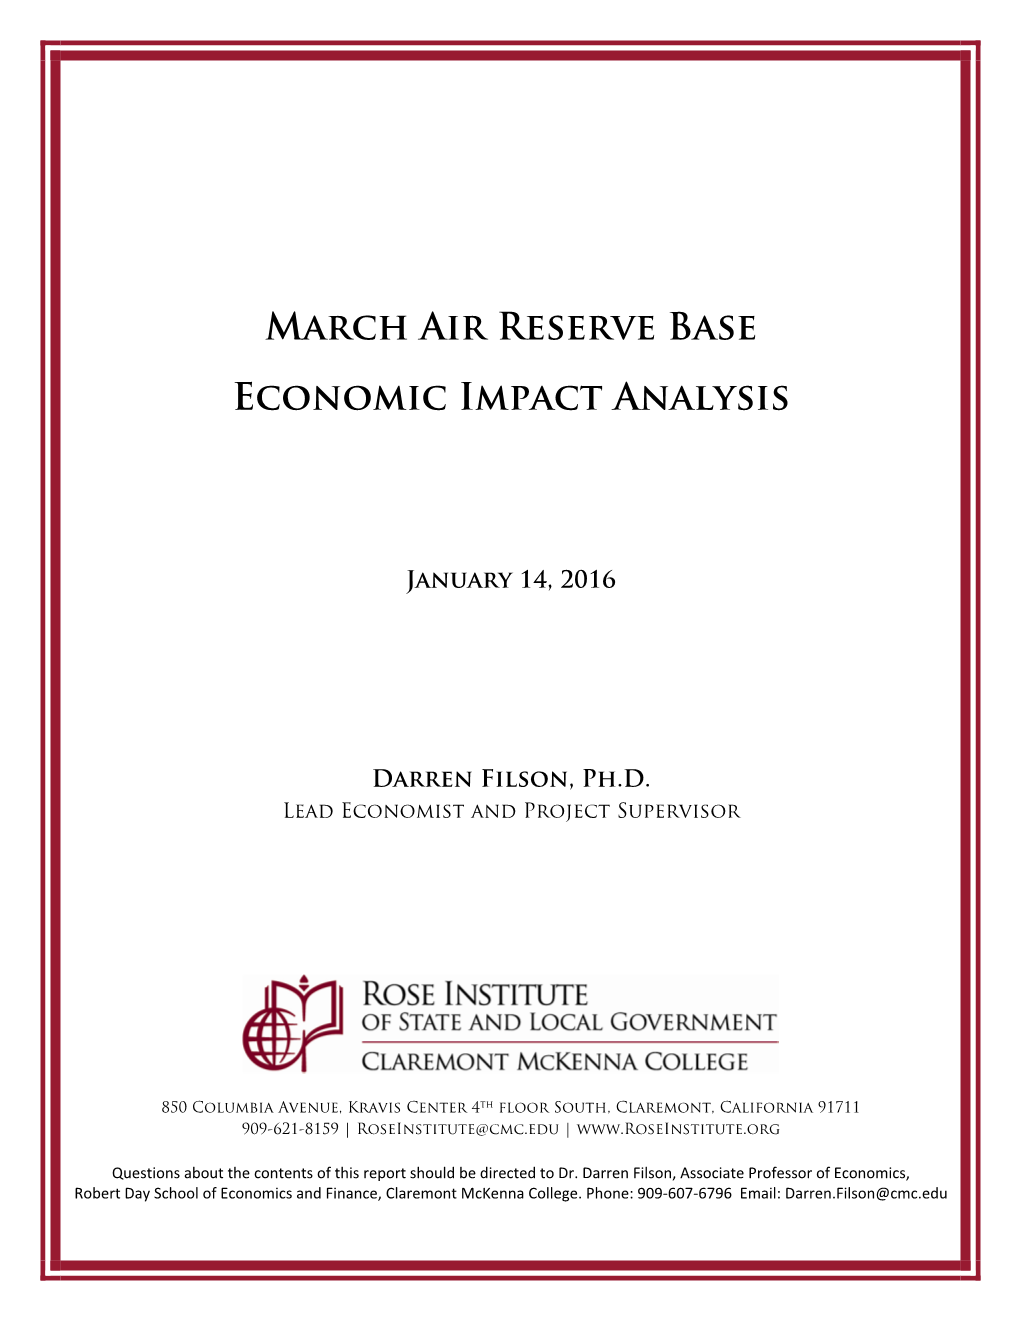 March Air Reserve Base Economic Impact Analysis